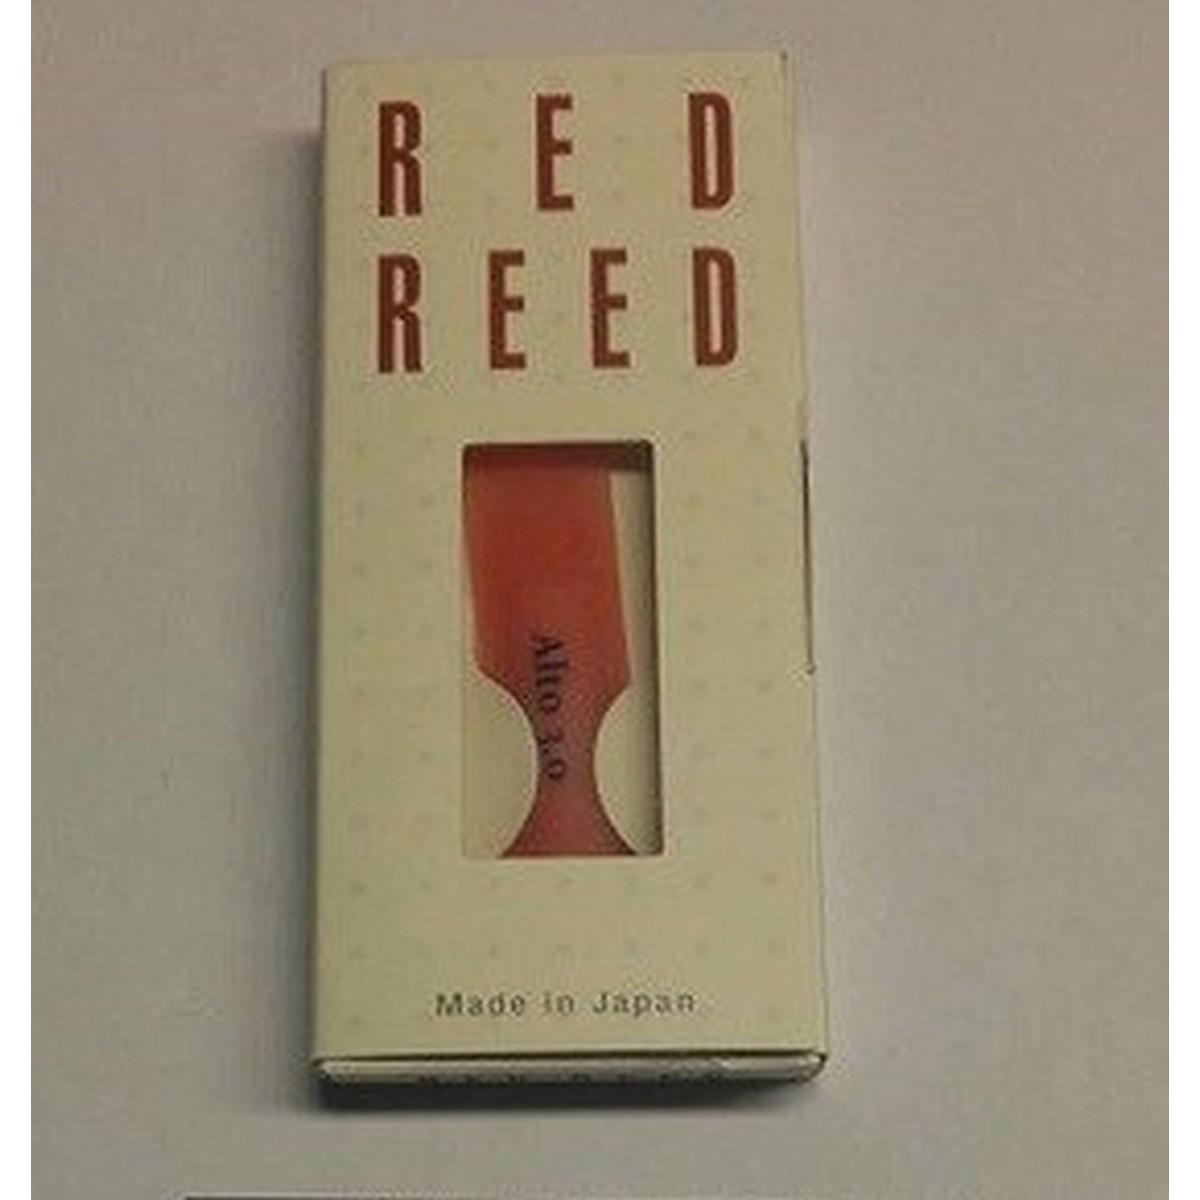 Red reed ancia sintetica per sax alto made in japan sconto 20%